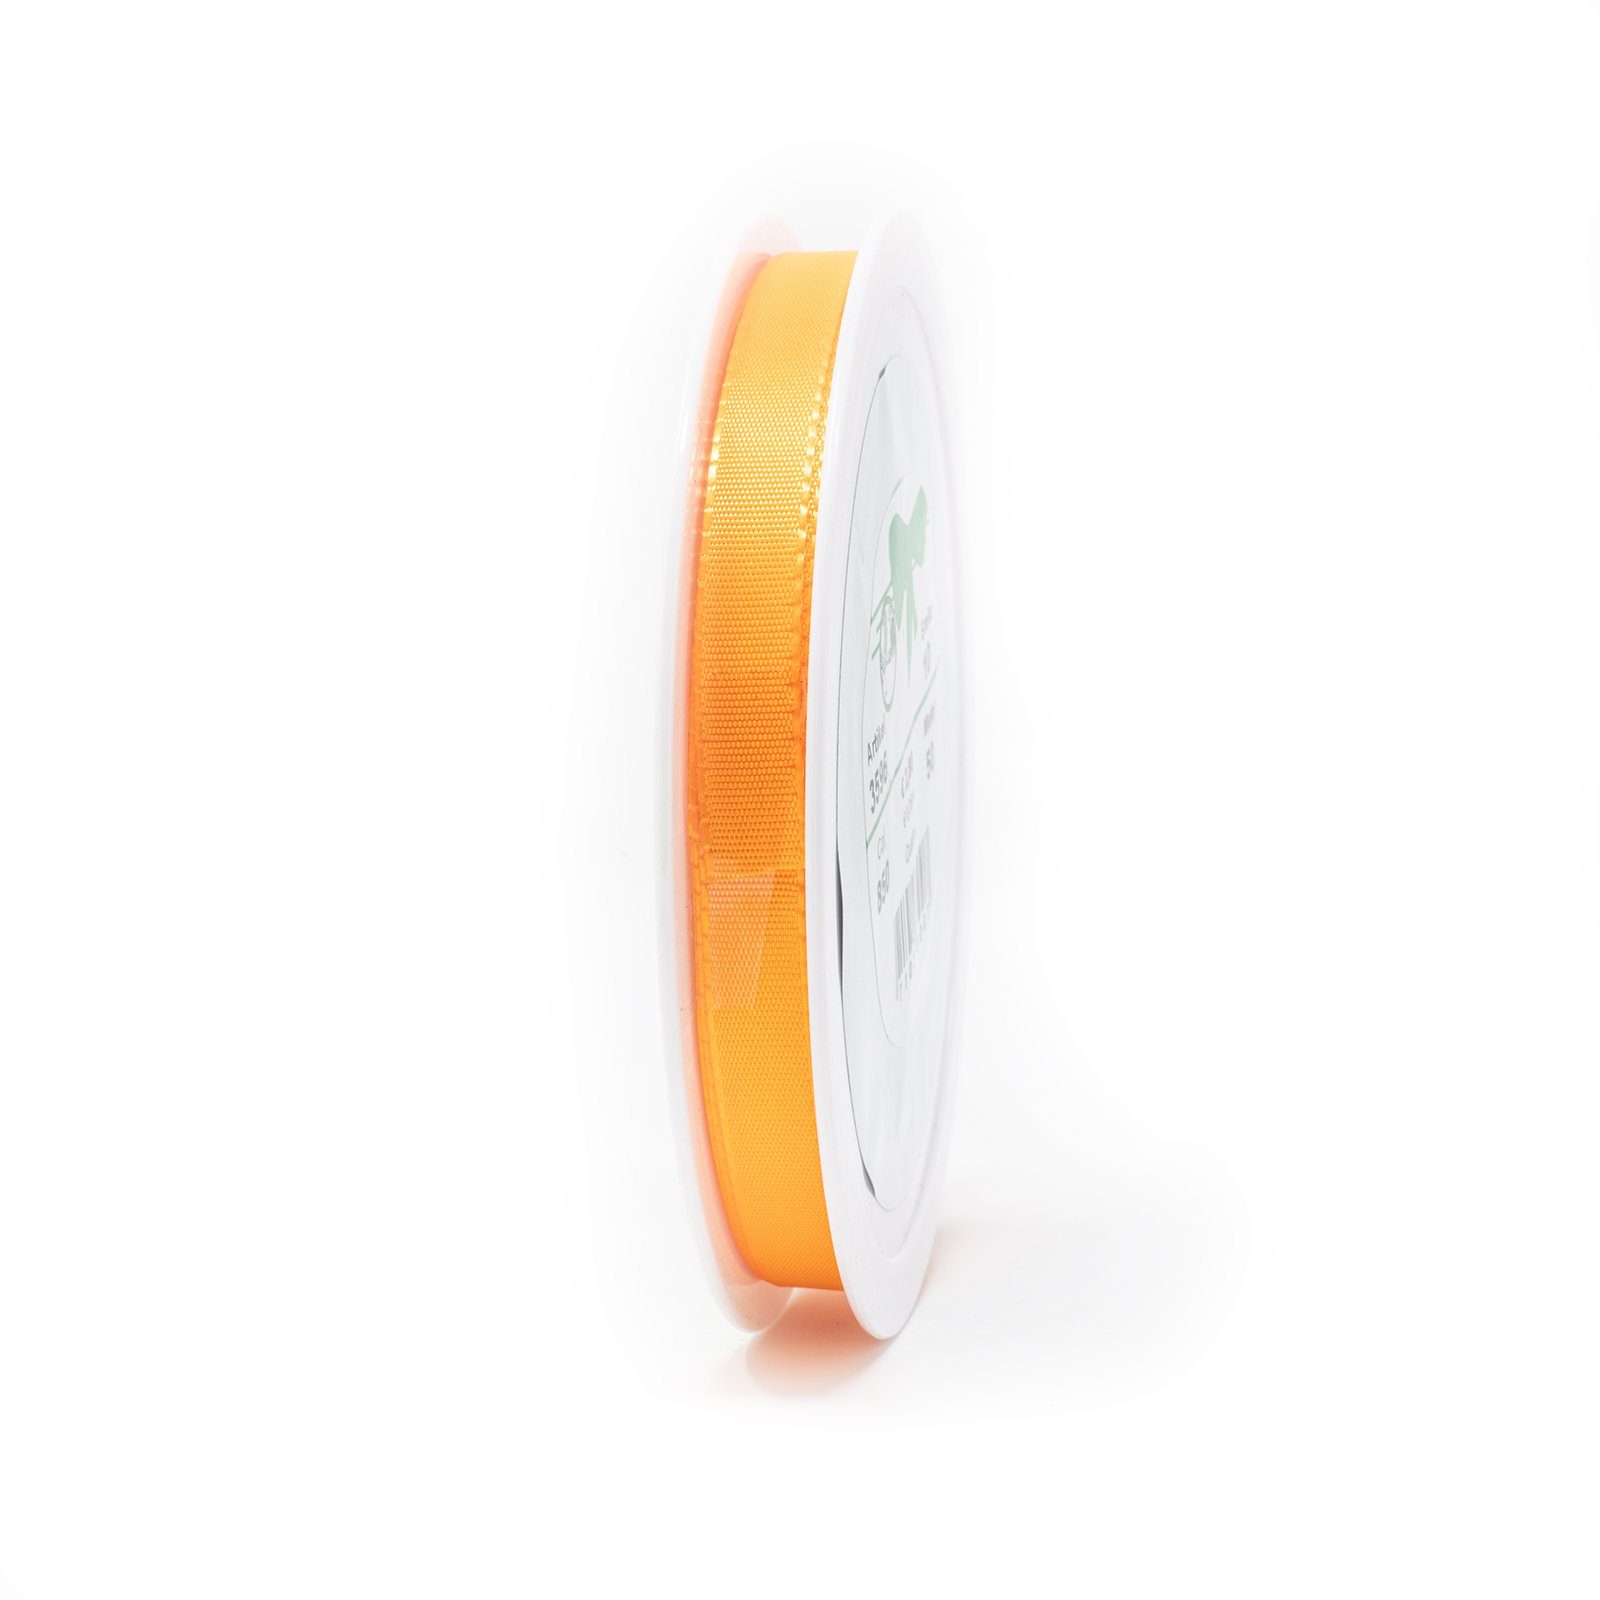 Maar & Pick KG Beschriftungsband Band Quattro - orange - 10 mm - 50 m | Beschriftungsbänder